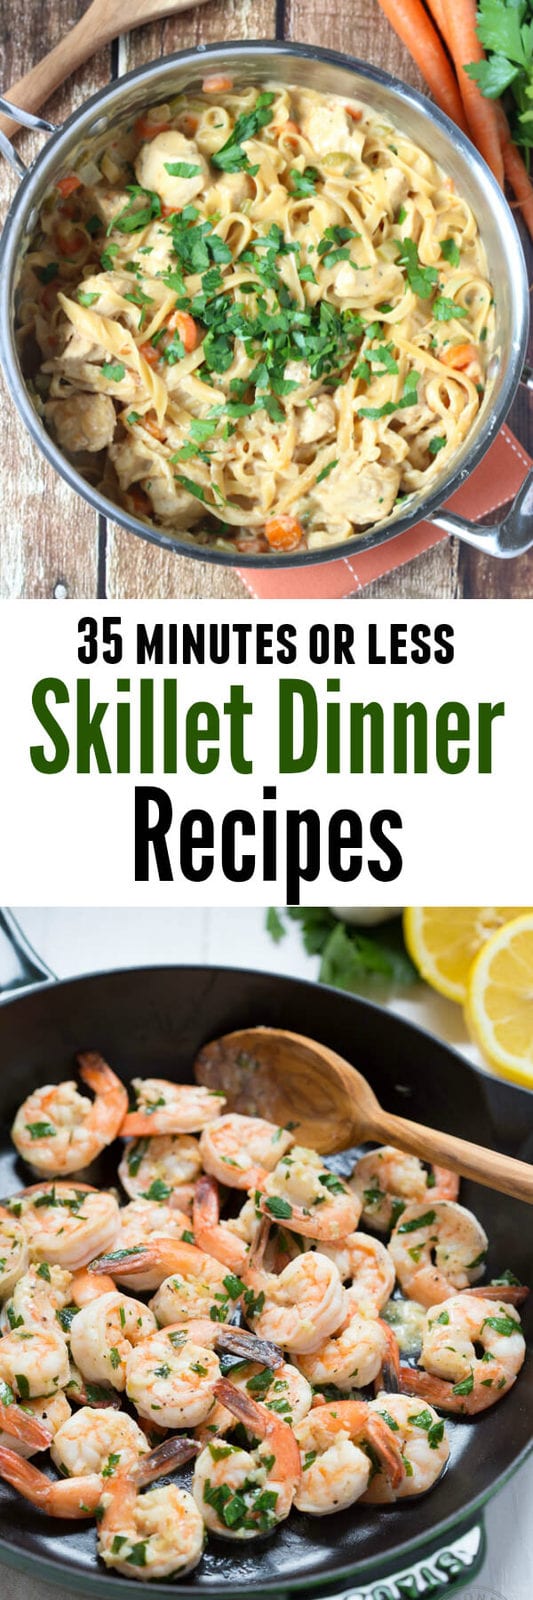 35 MInutes or Less Skillet Dinner Recipes